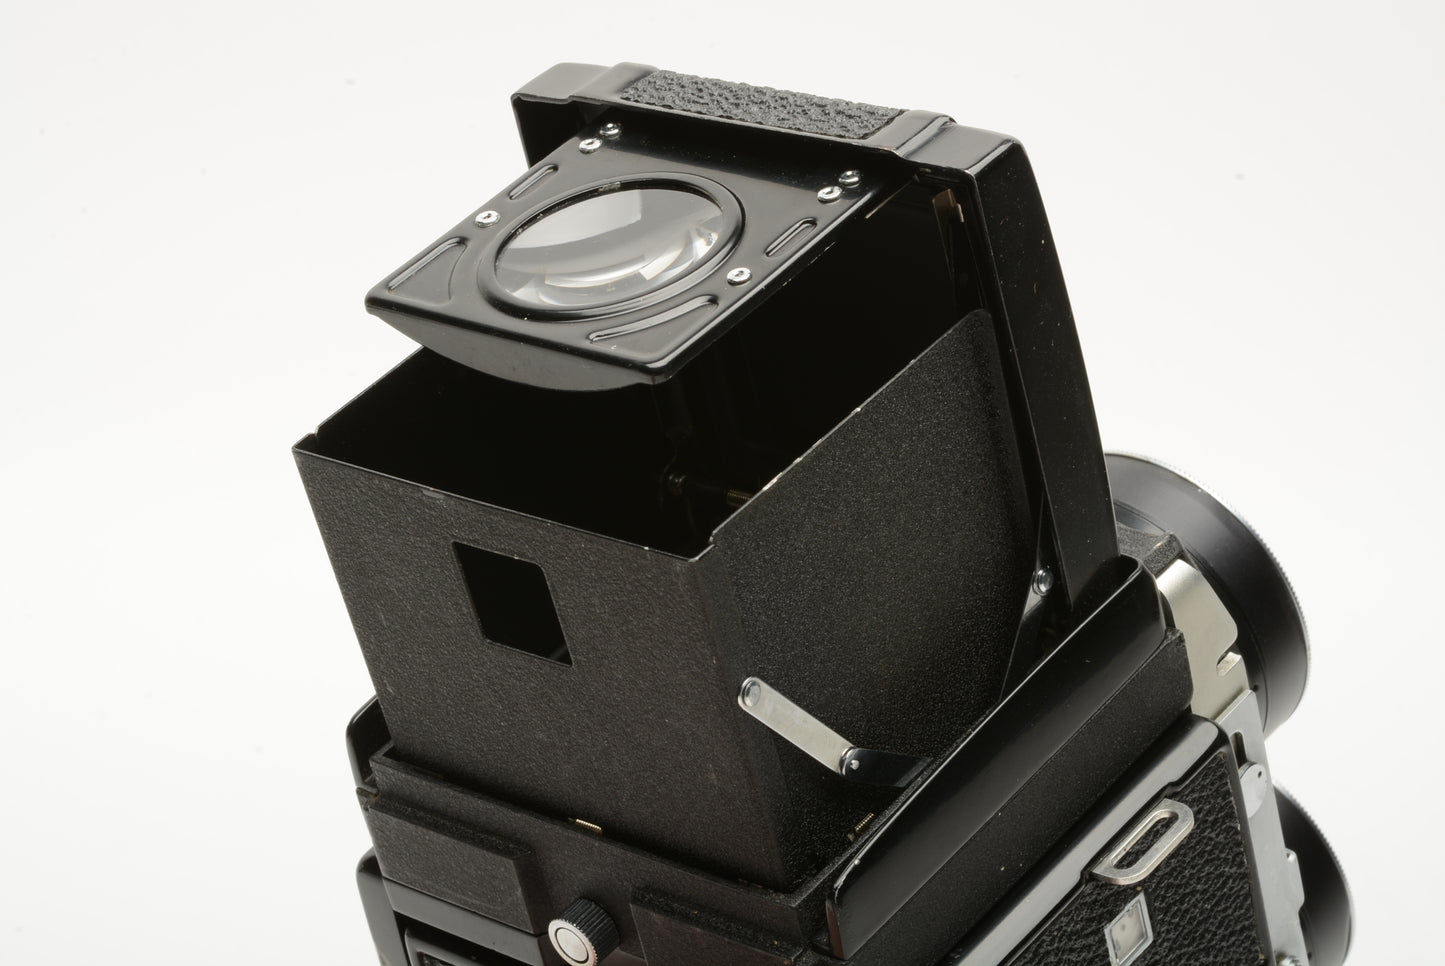 Mamiya C330 Professional 120 TLR camera w/65mm f3.5 lens, cap, strap, tested, great!